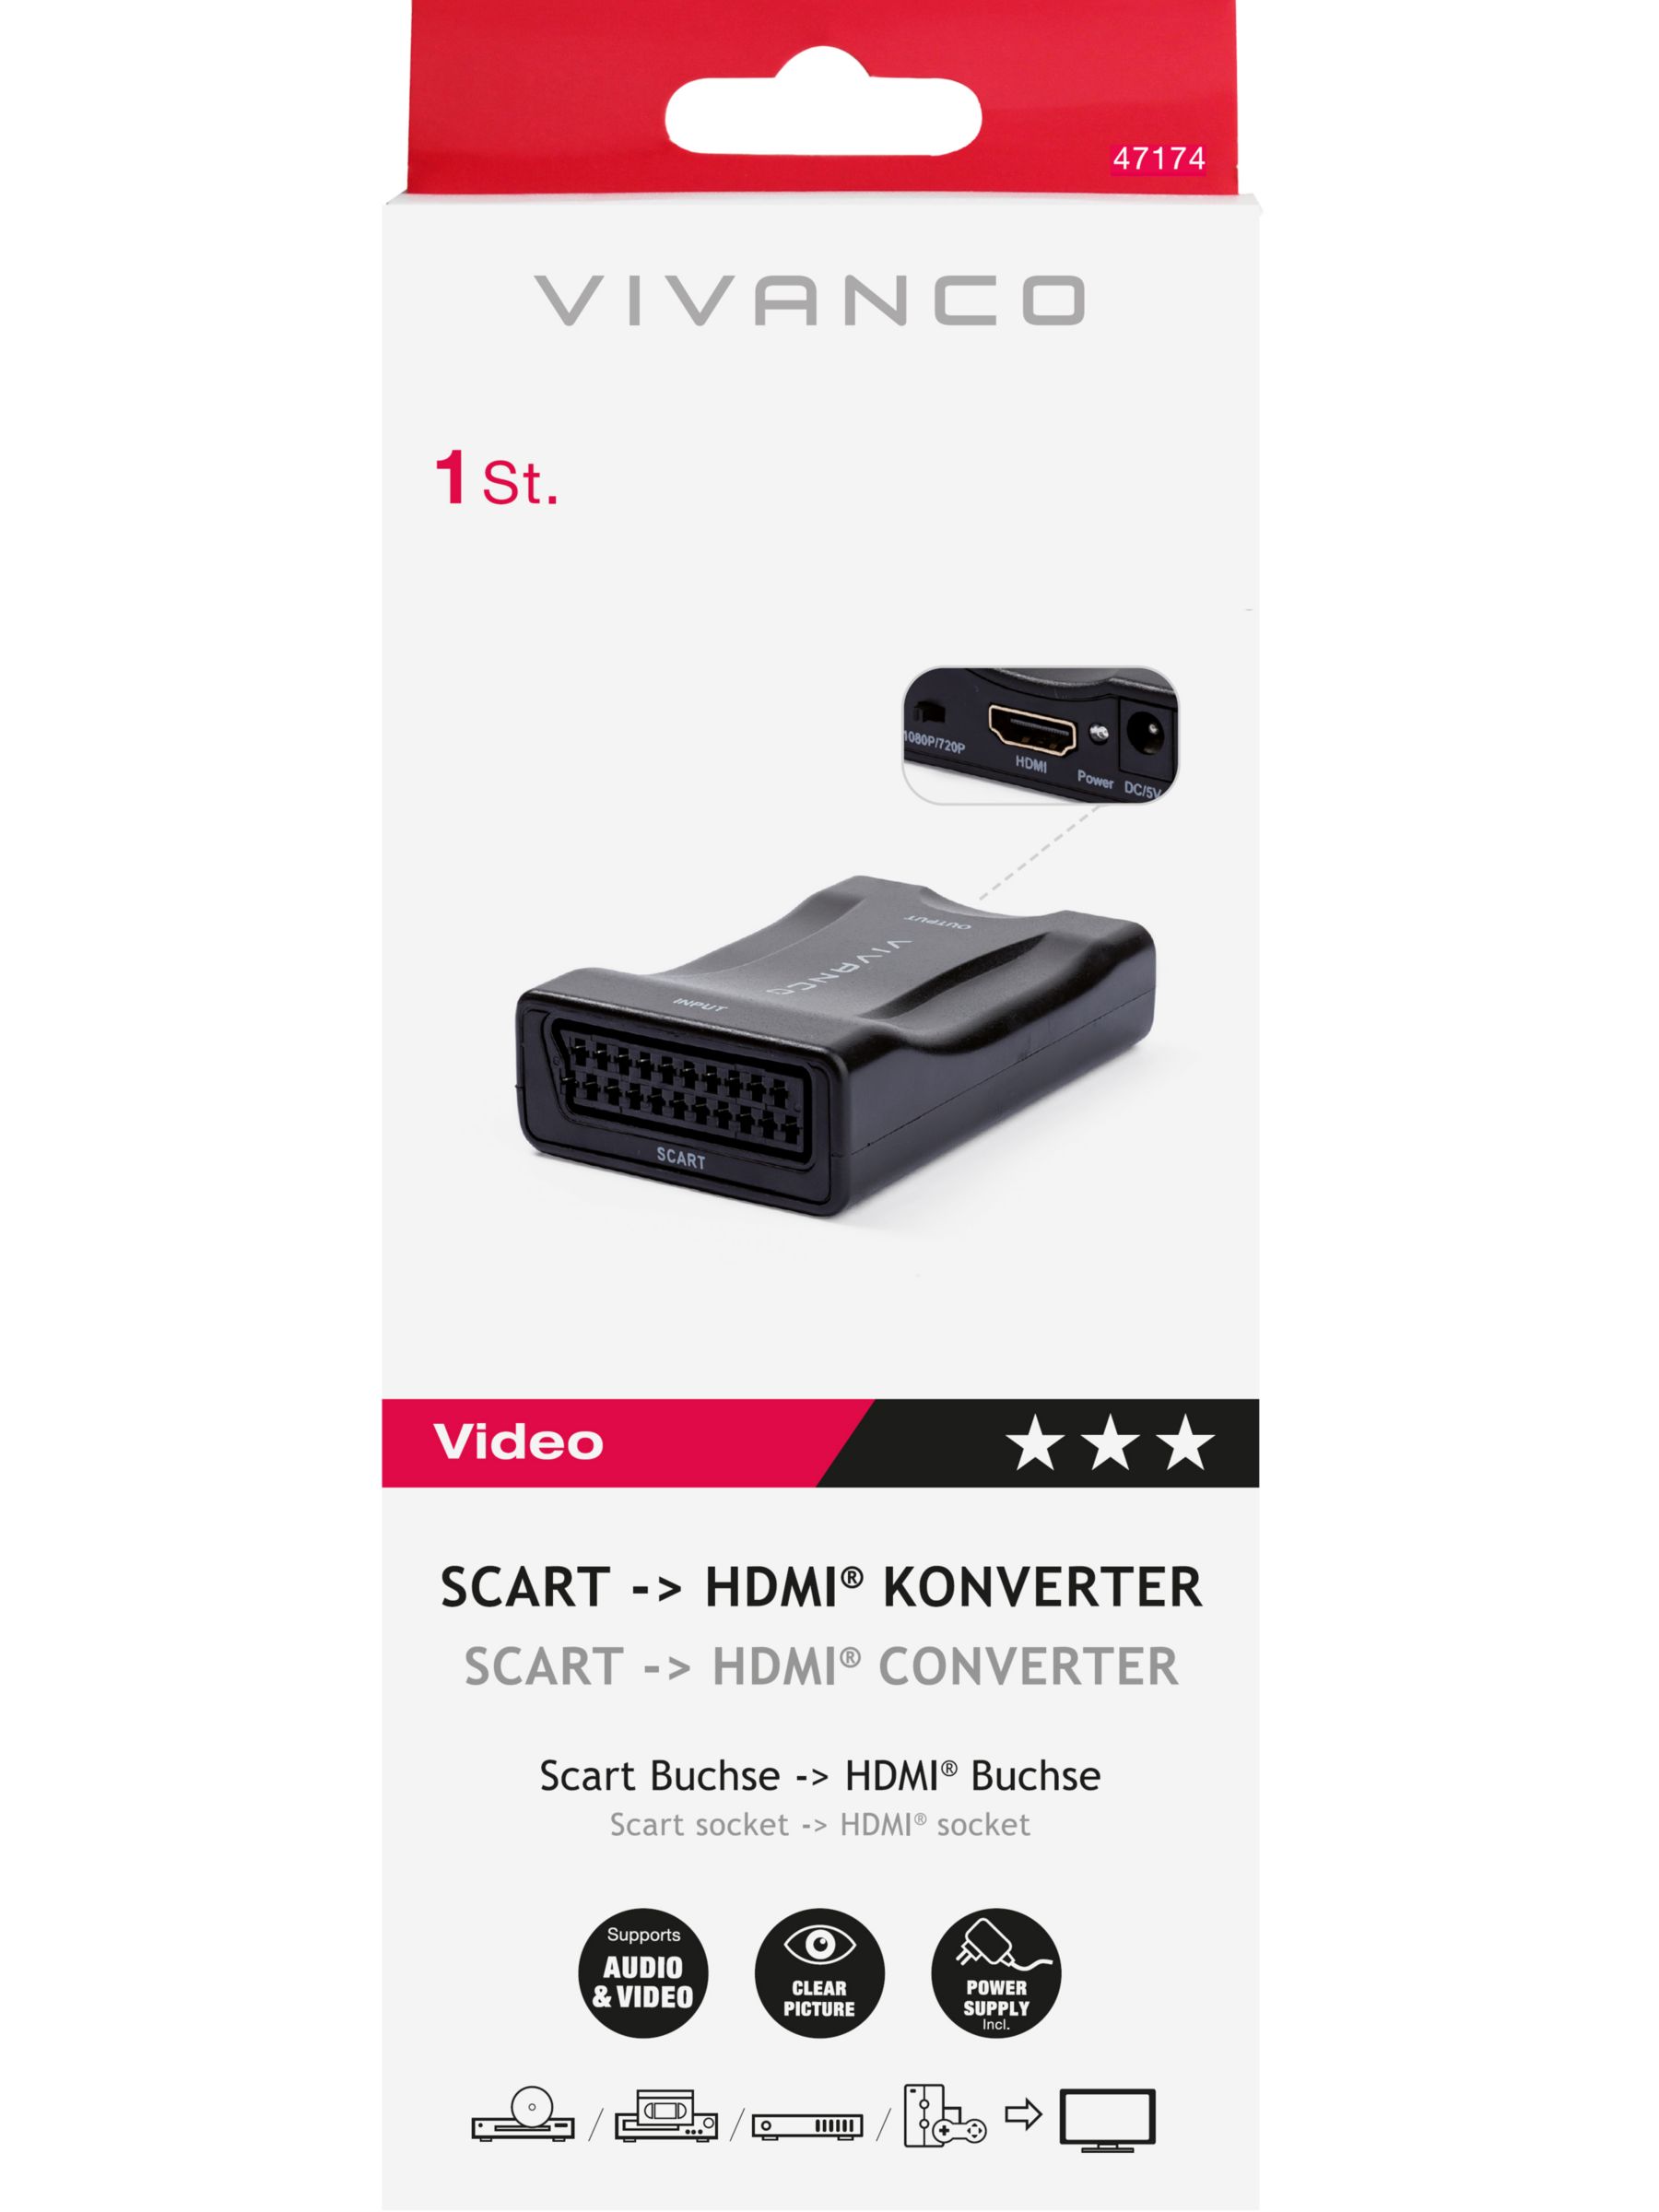 Oferta del día  Vivanco 47173 adaptador video euroconector scart(h) - hdmi(h)  fhd vivanc